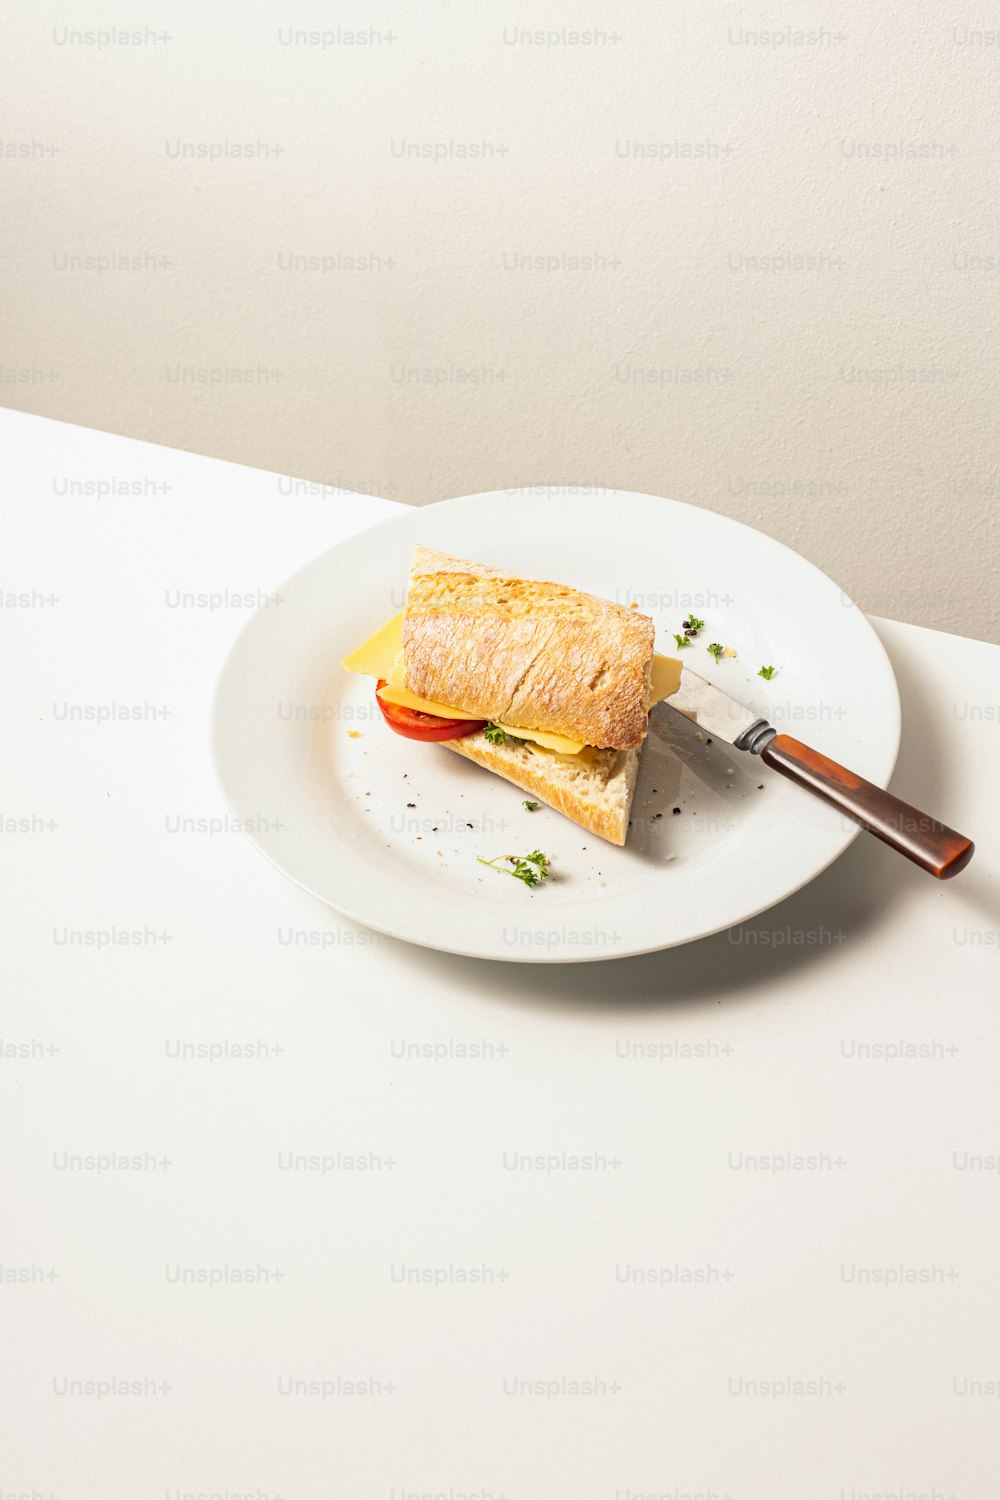 Un sándwich en un plato